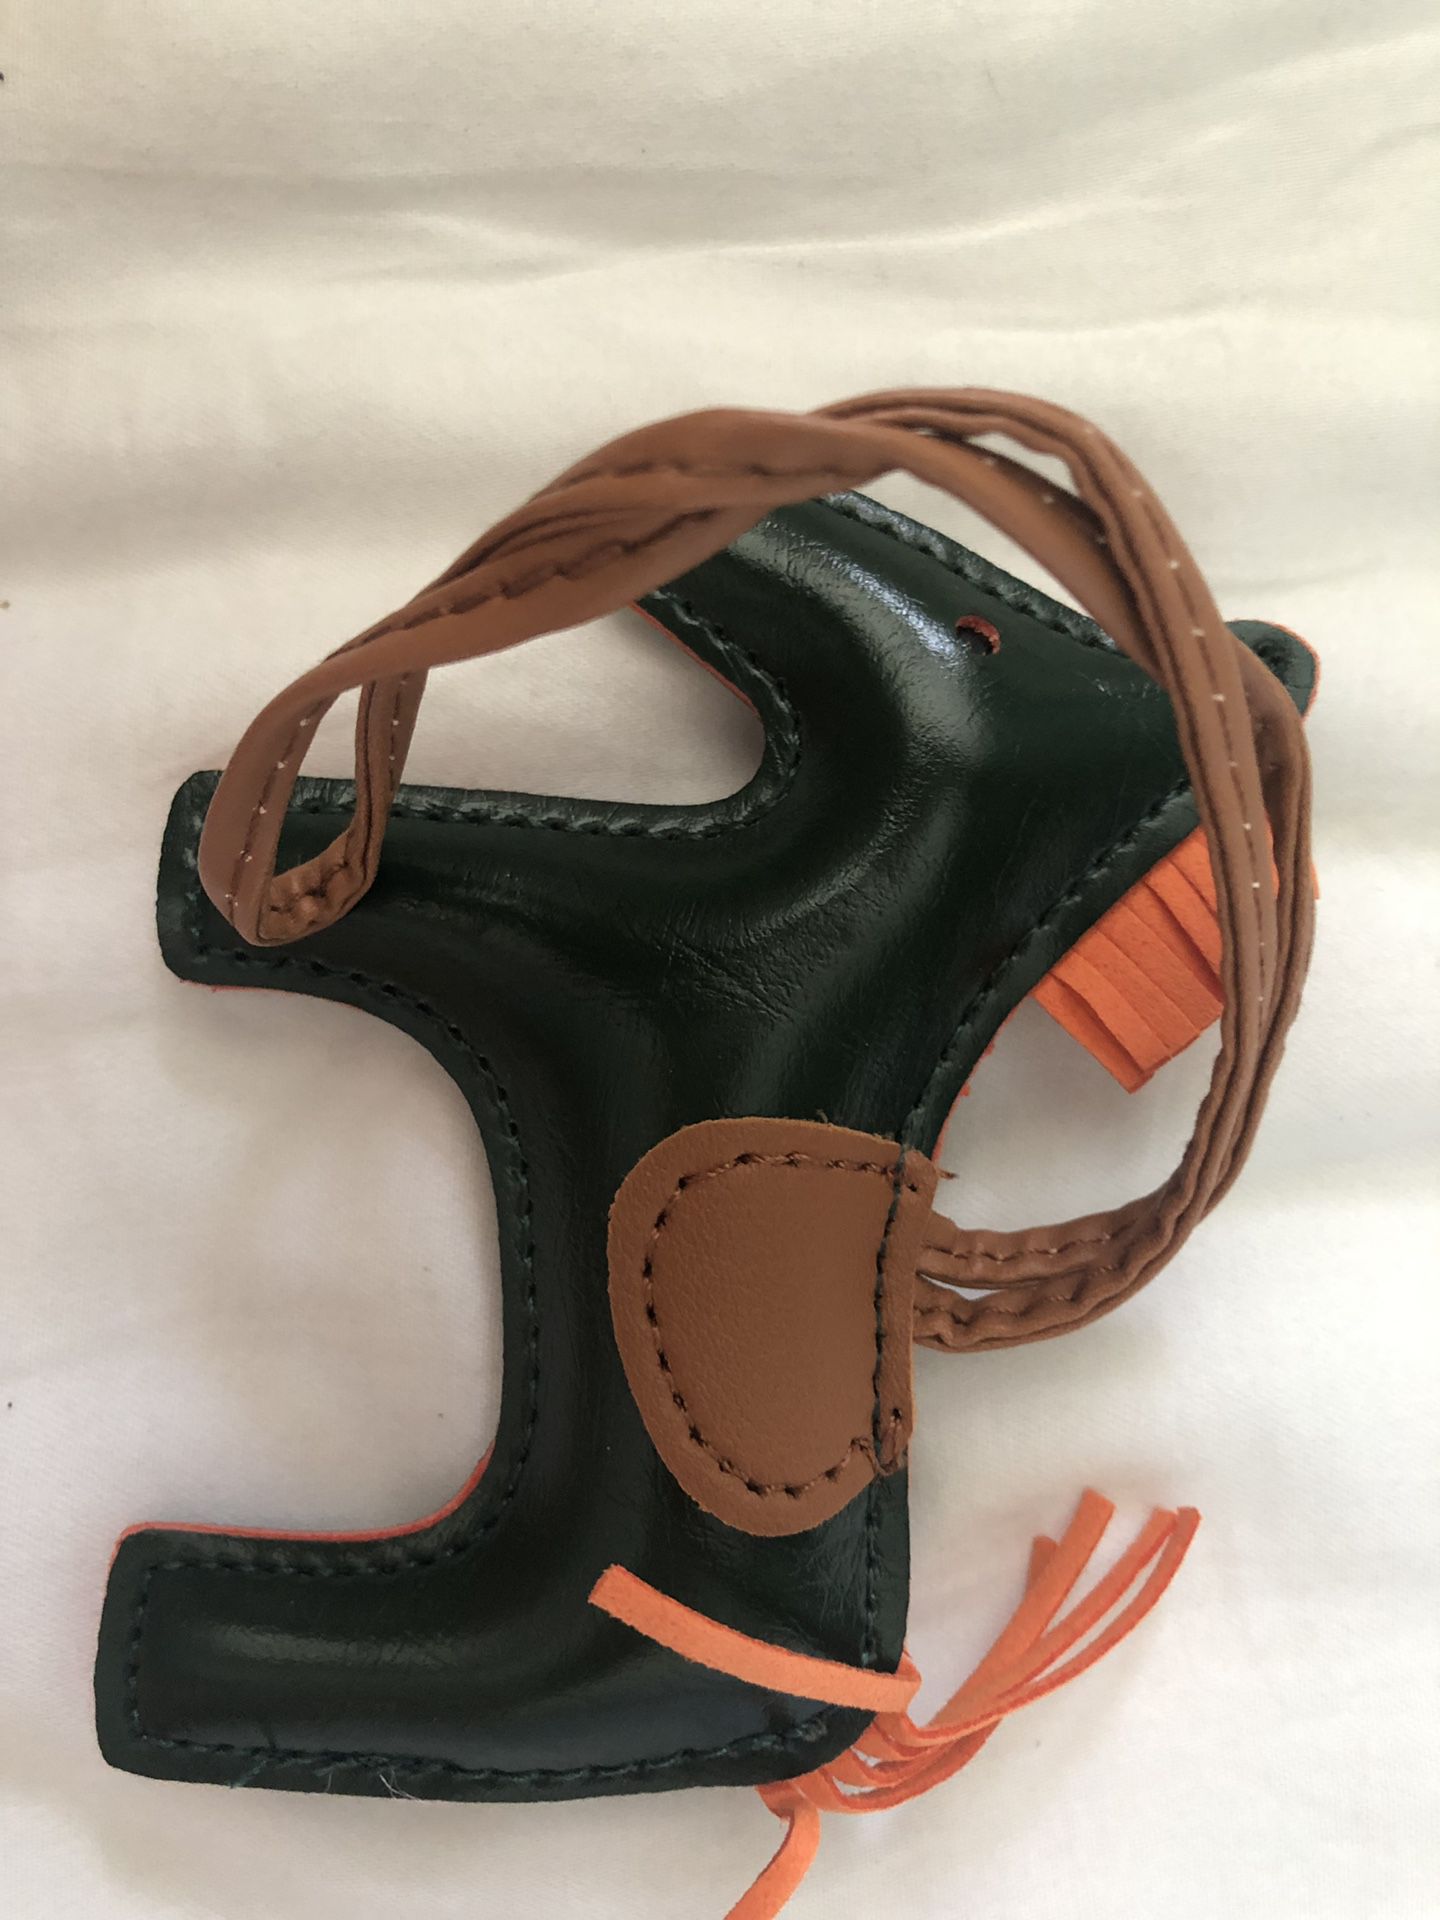 Green and orange horse purse/handbag charm